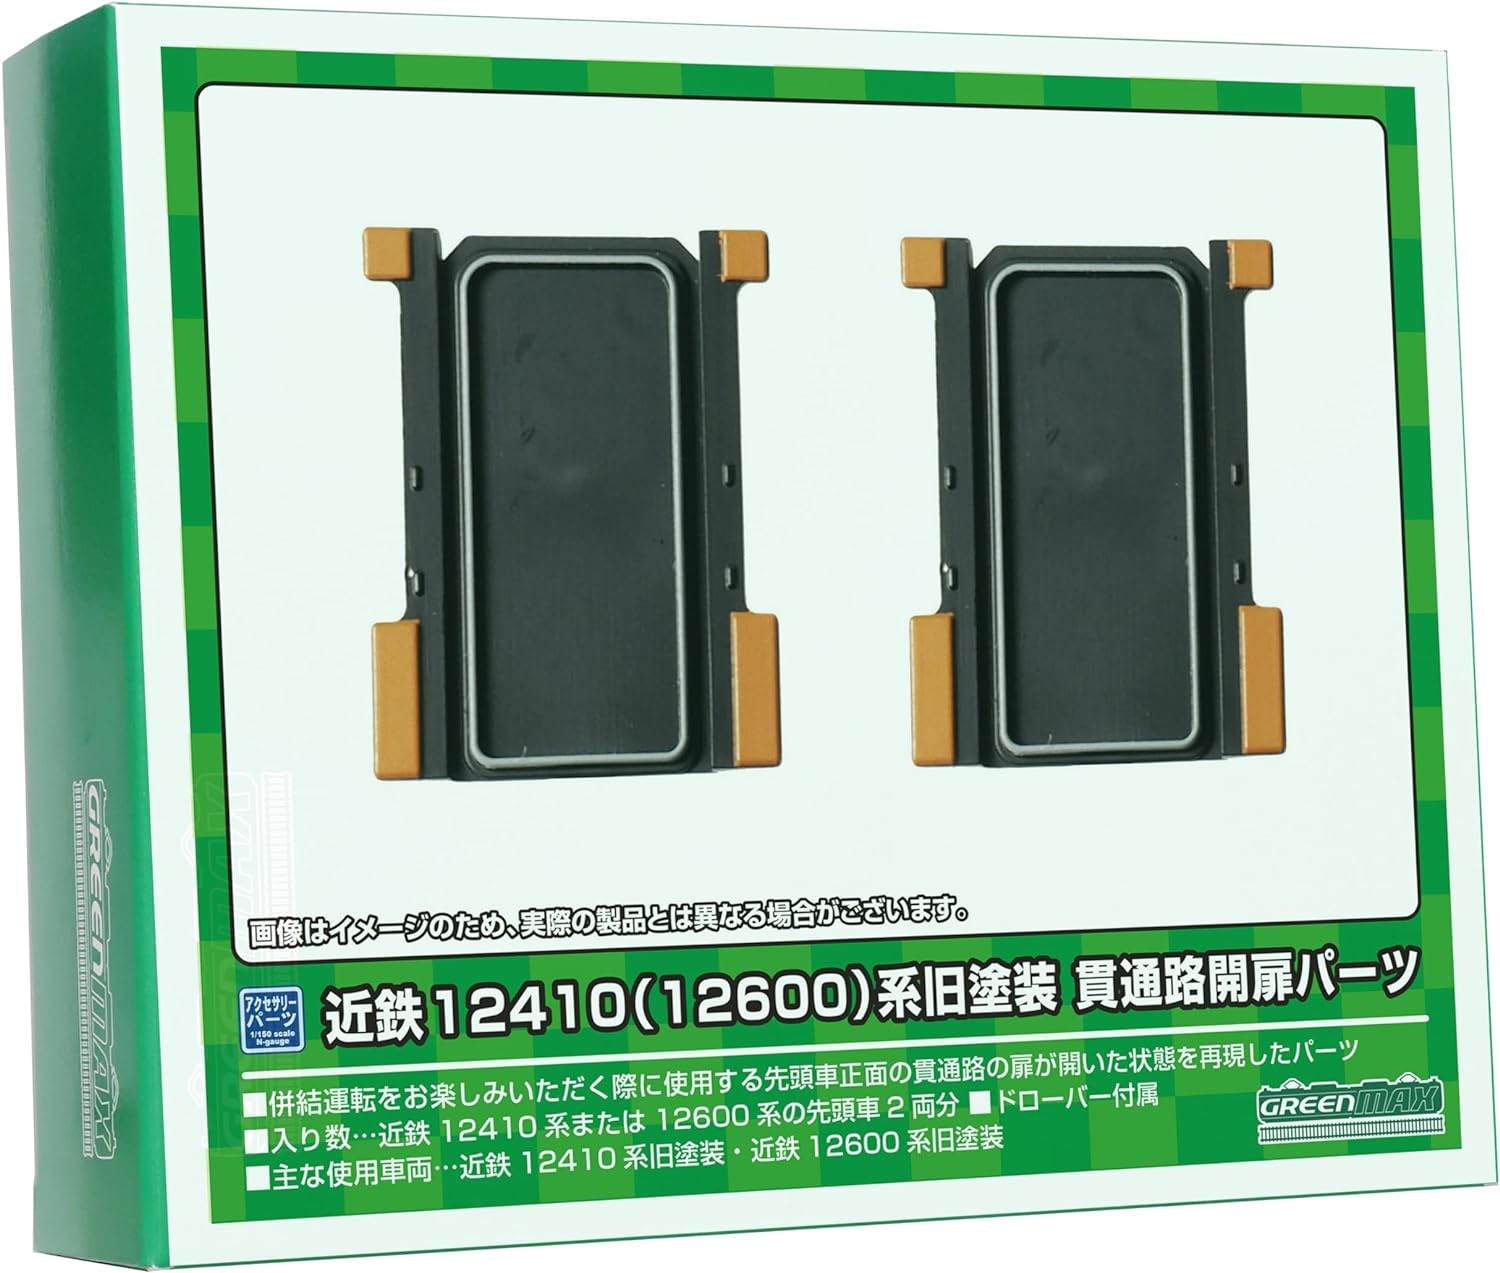 GreenMax 8599 N Gauge Kintetsu 12410 (12600) Series, Old Painted Passage Opening Parts